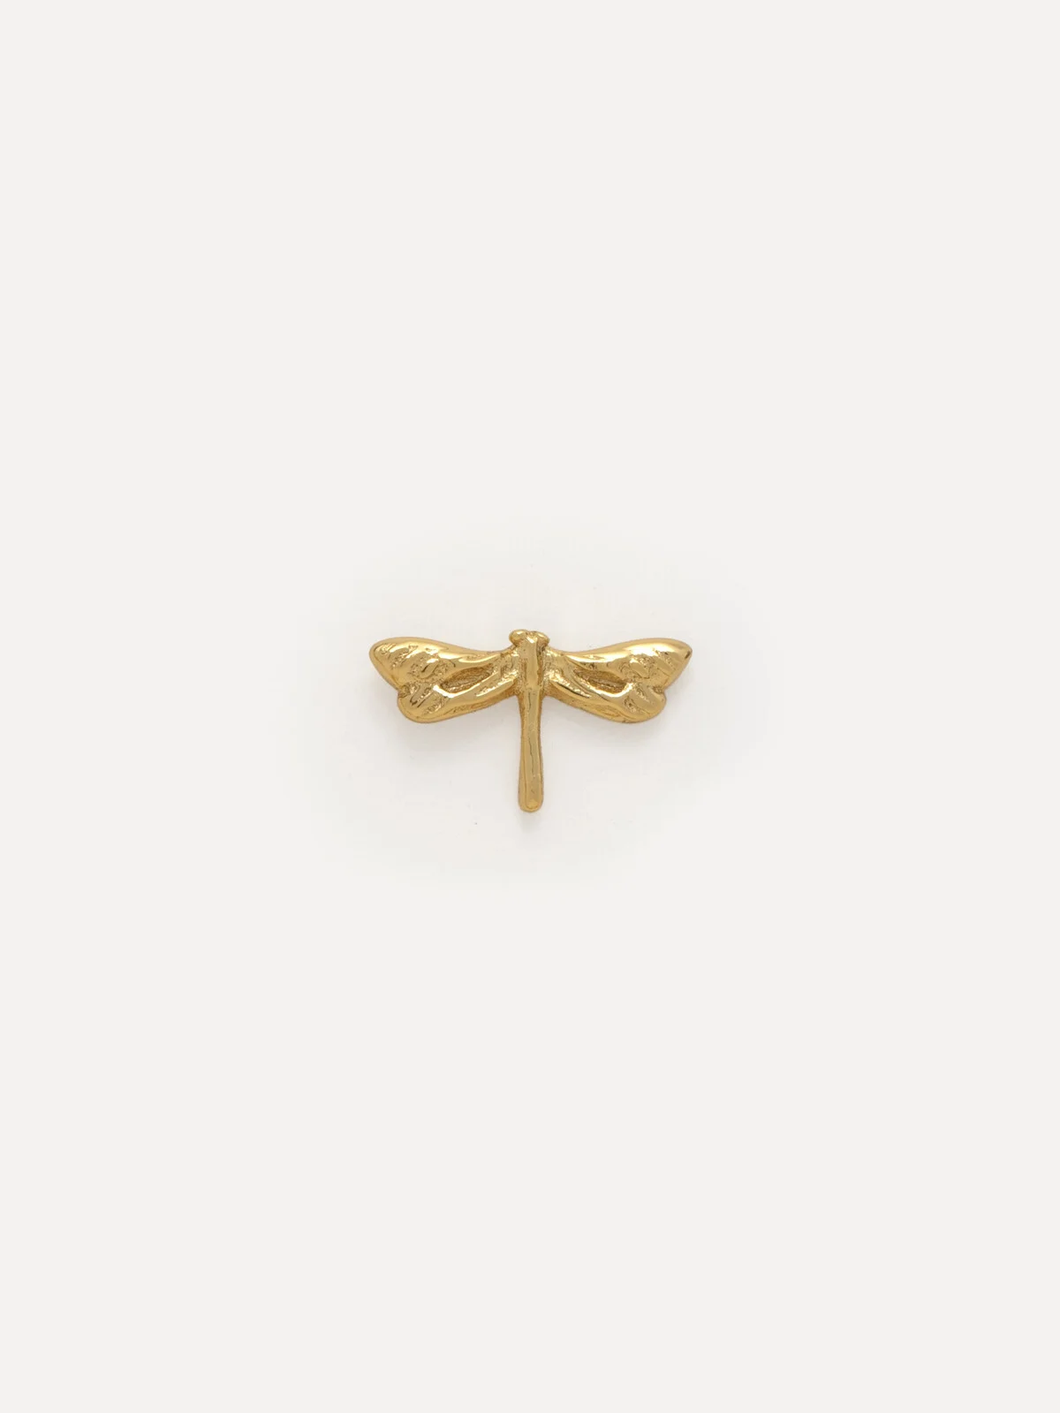 Les Soeurs - Jolie Dragonfly - Gold